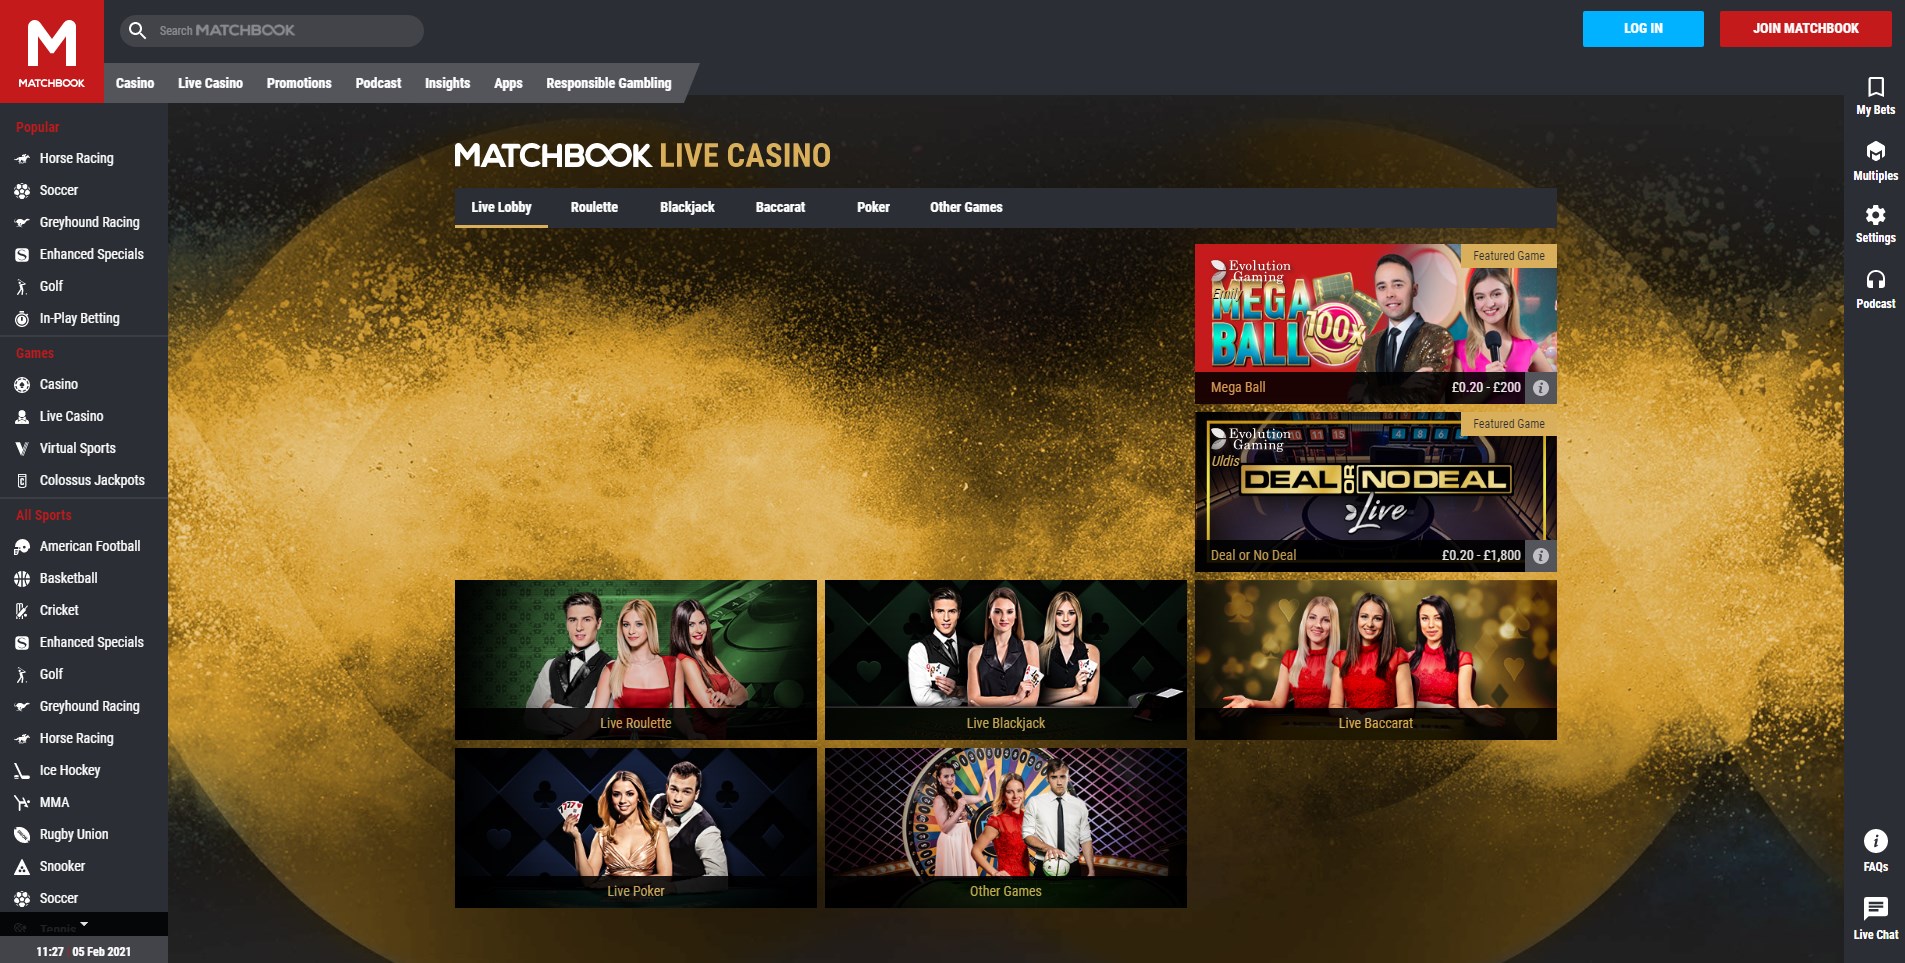 Matchbook Casino Live Dealer Games